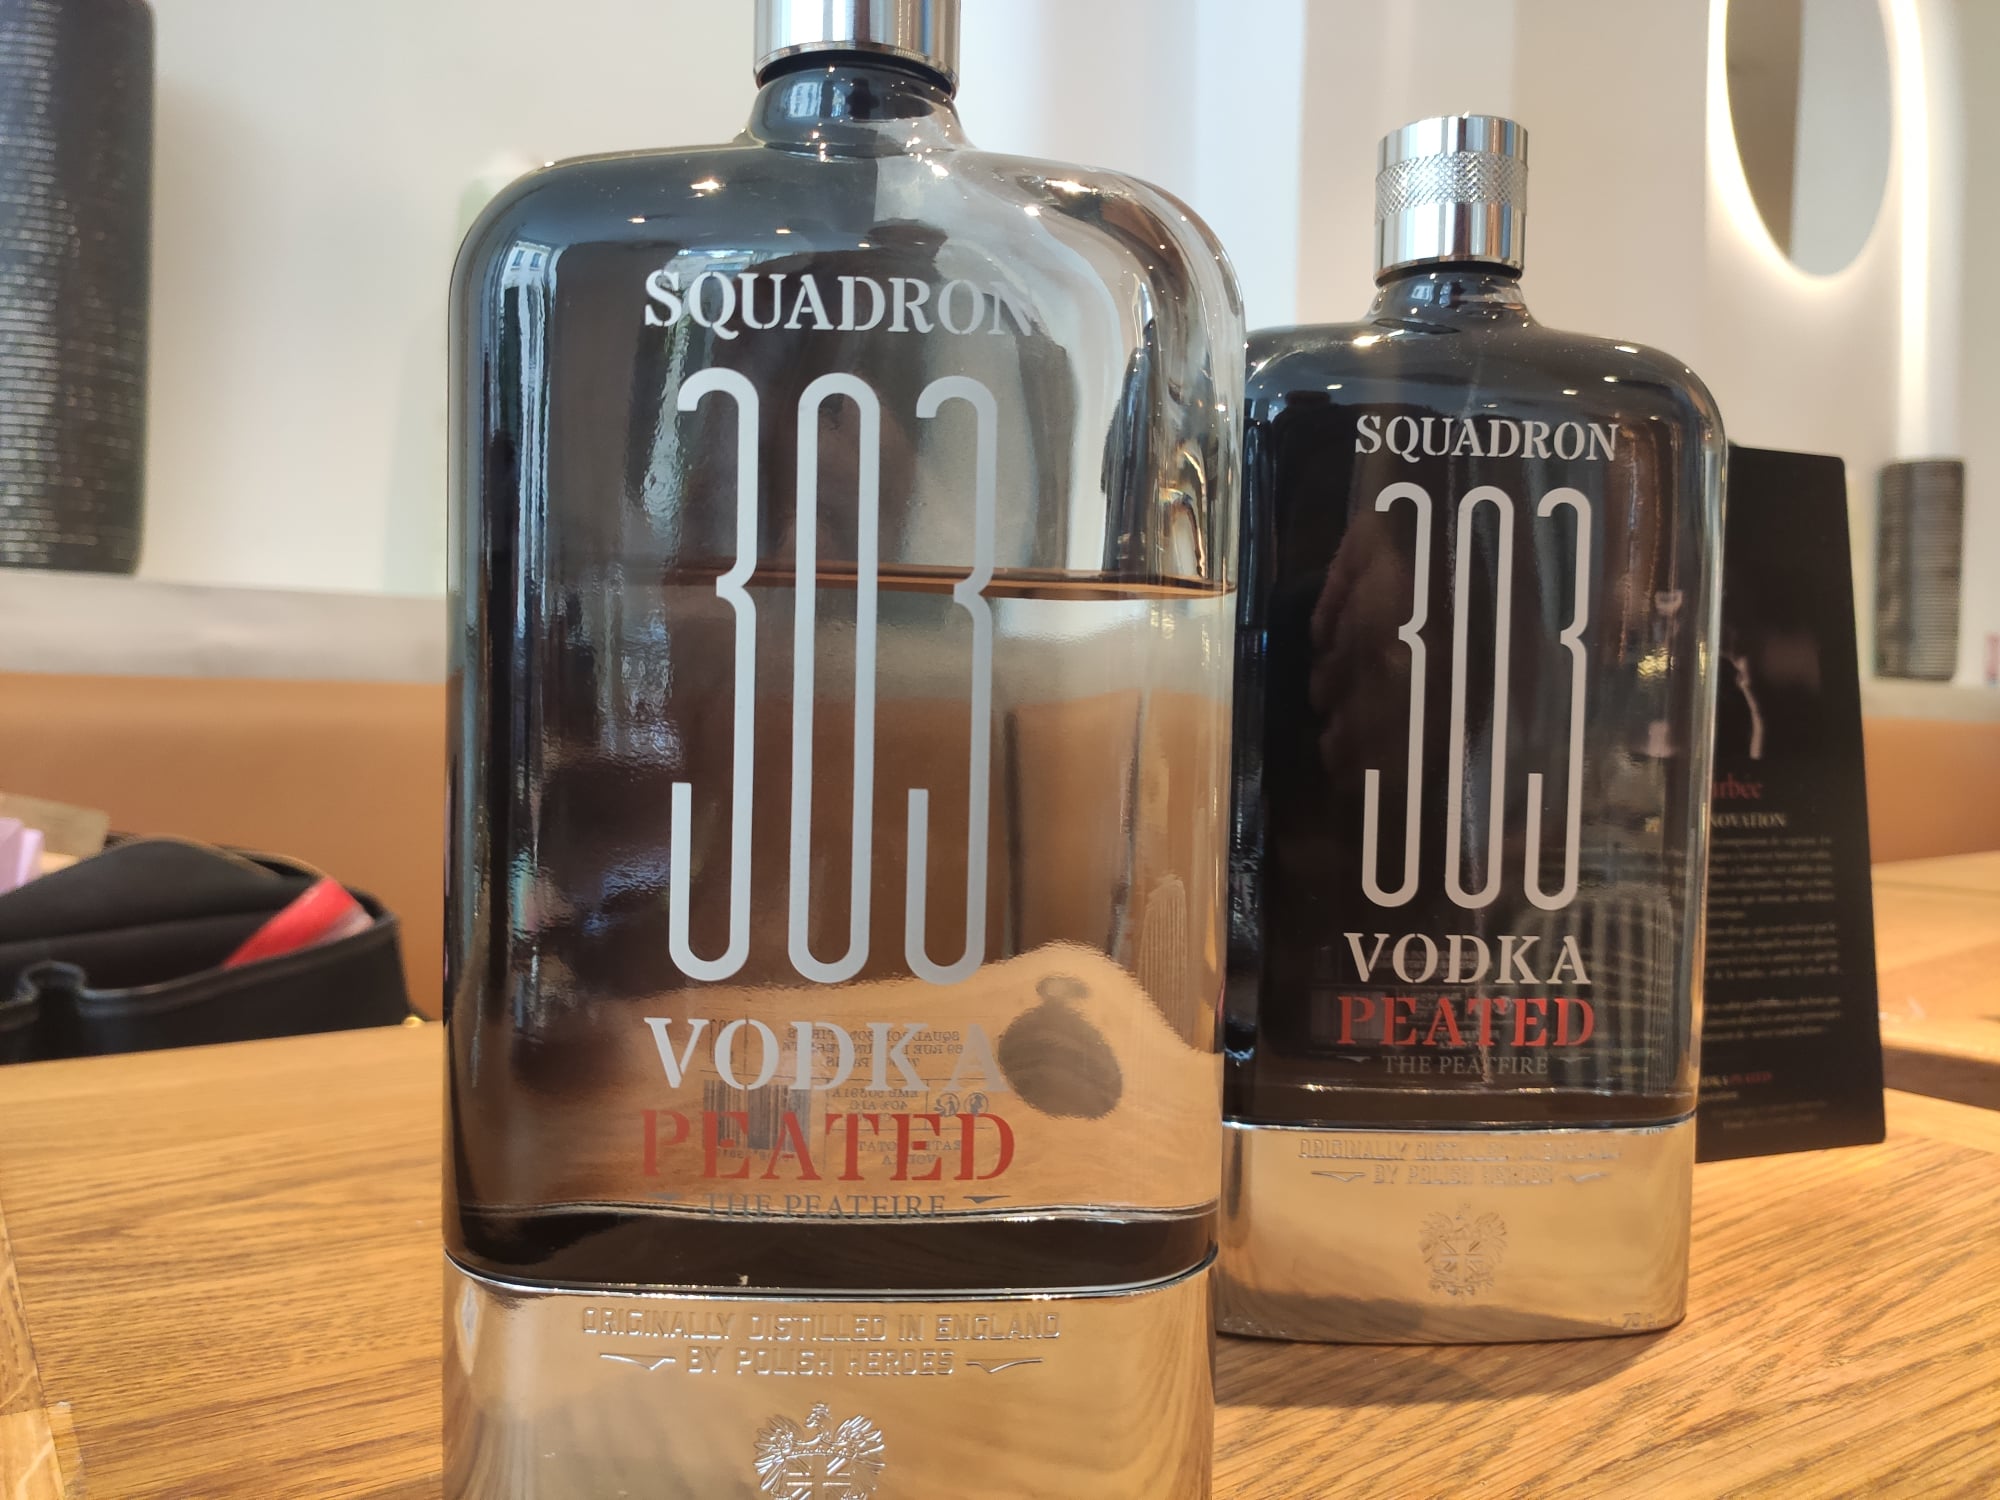 Squadron 303 - Peated vodka